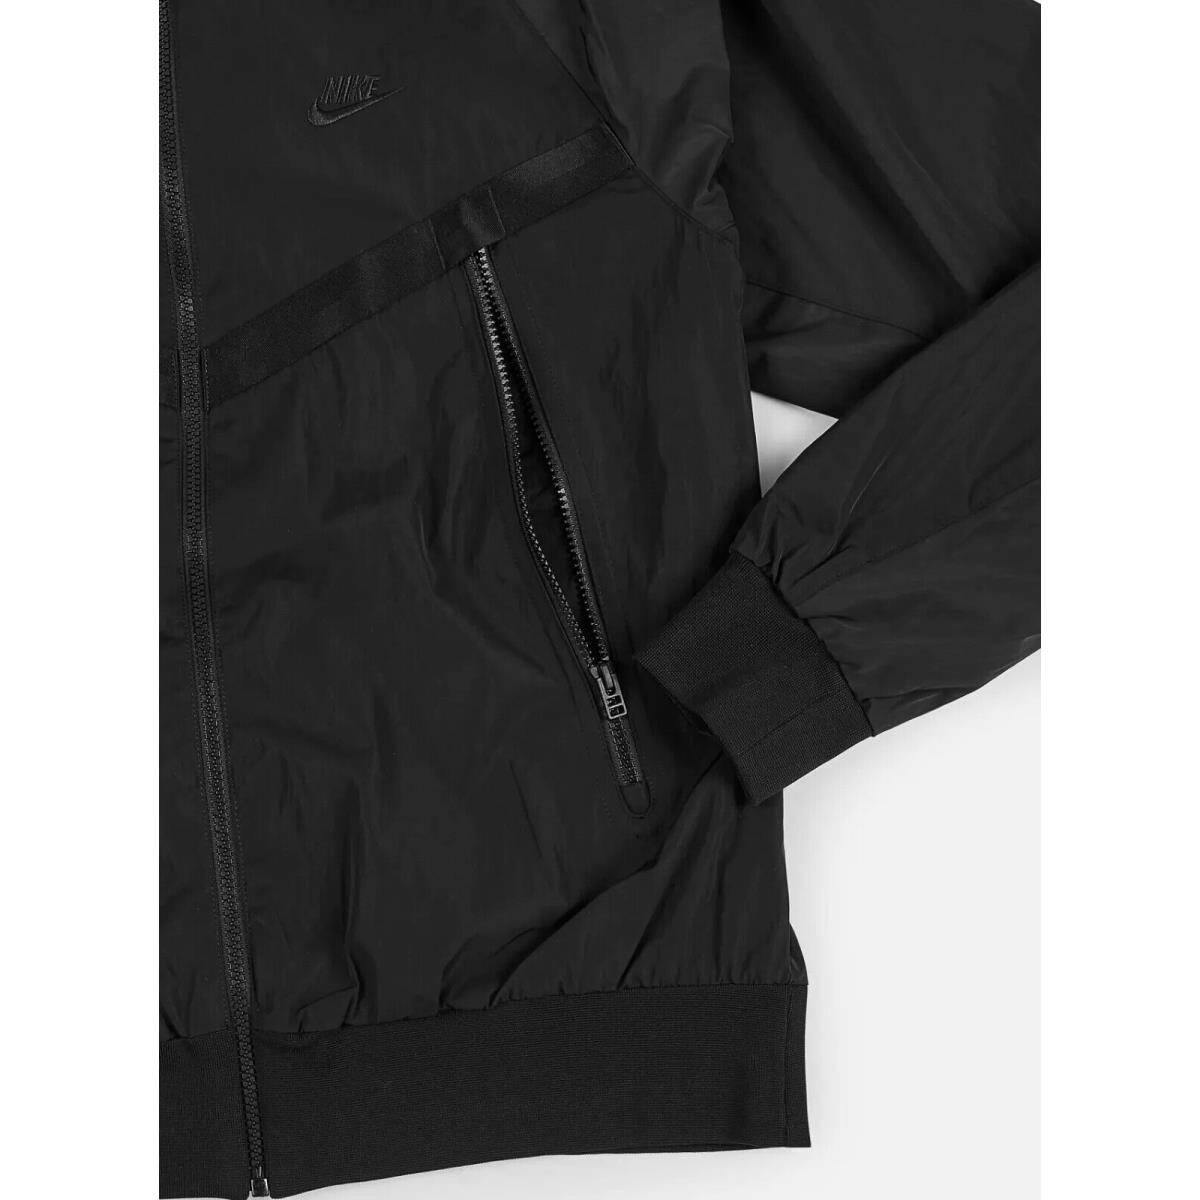 Nike clothing Sportswear Premium Windrunner - Black 3